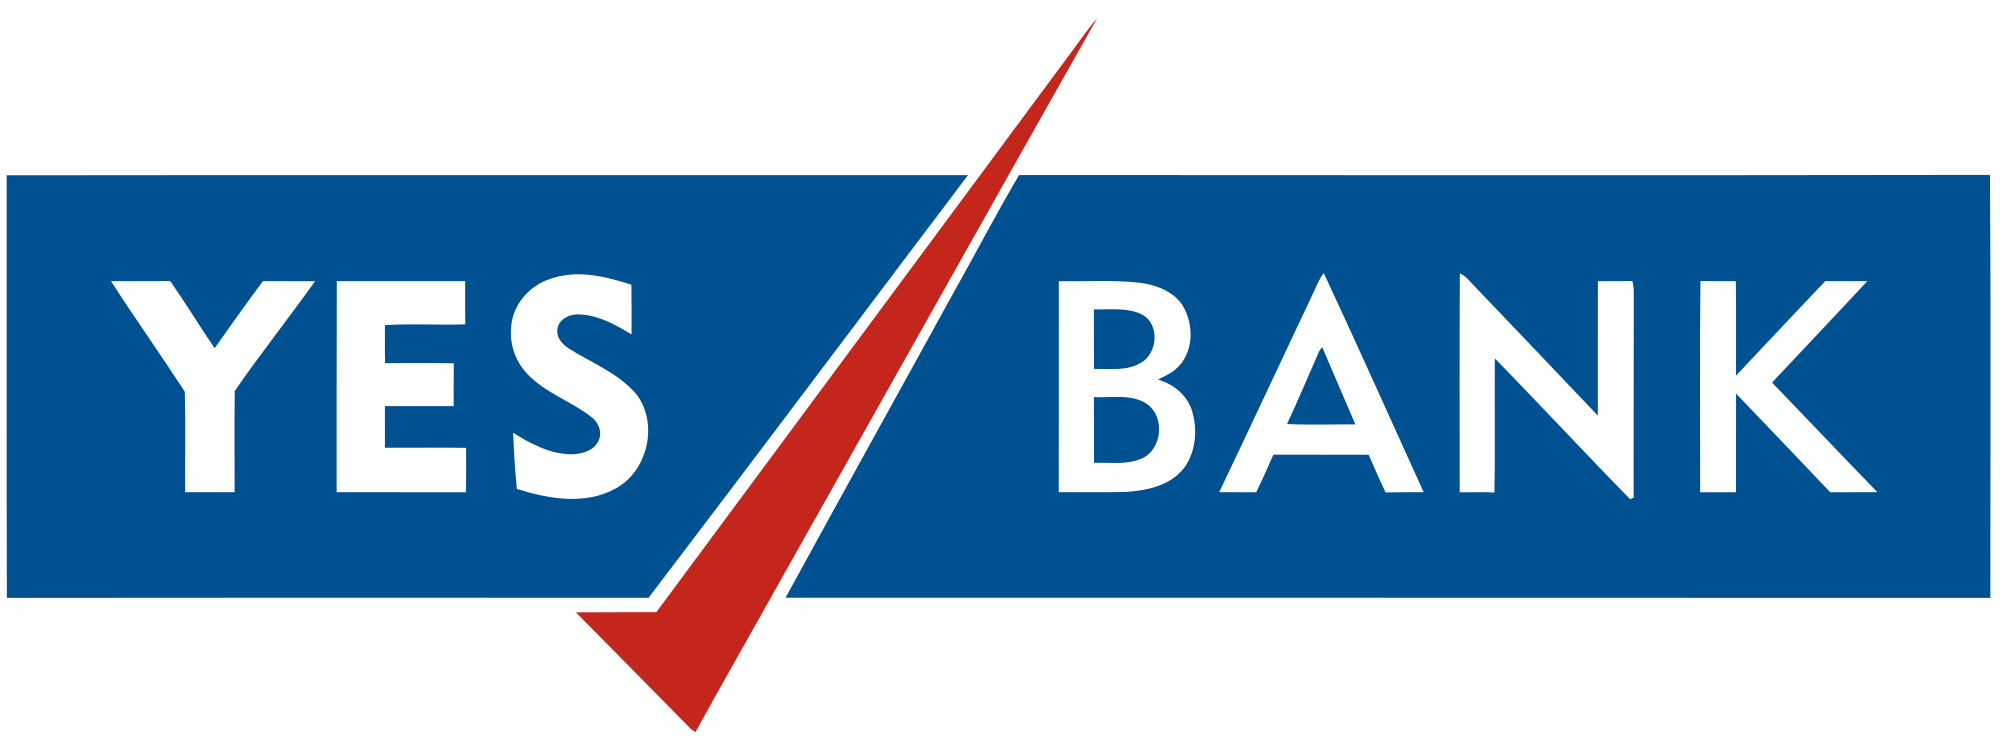 Banking Logo - File:Yes Bank SVG Logo.svg - Wikimedia Commons